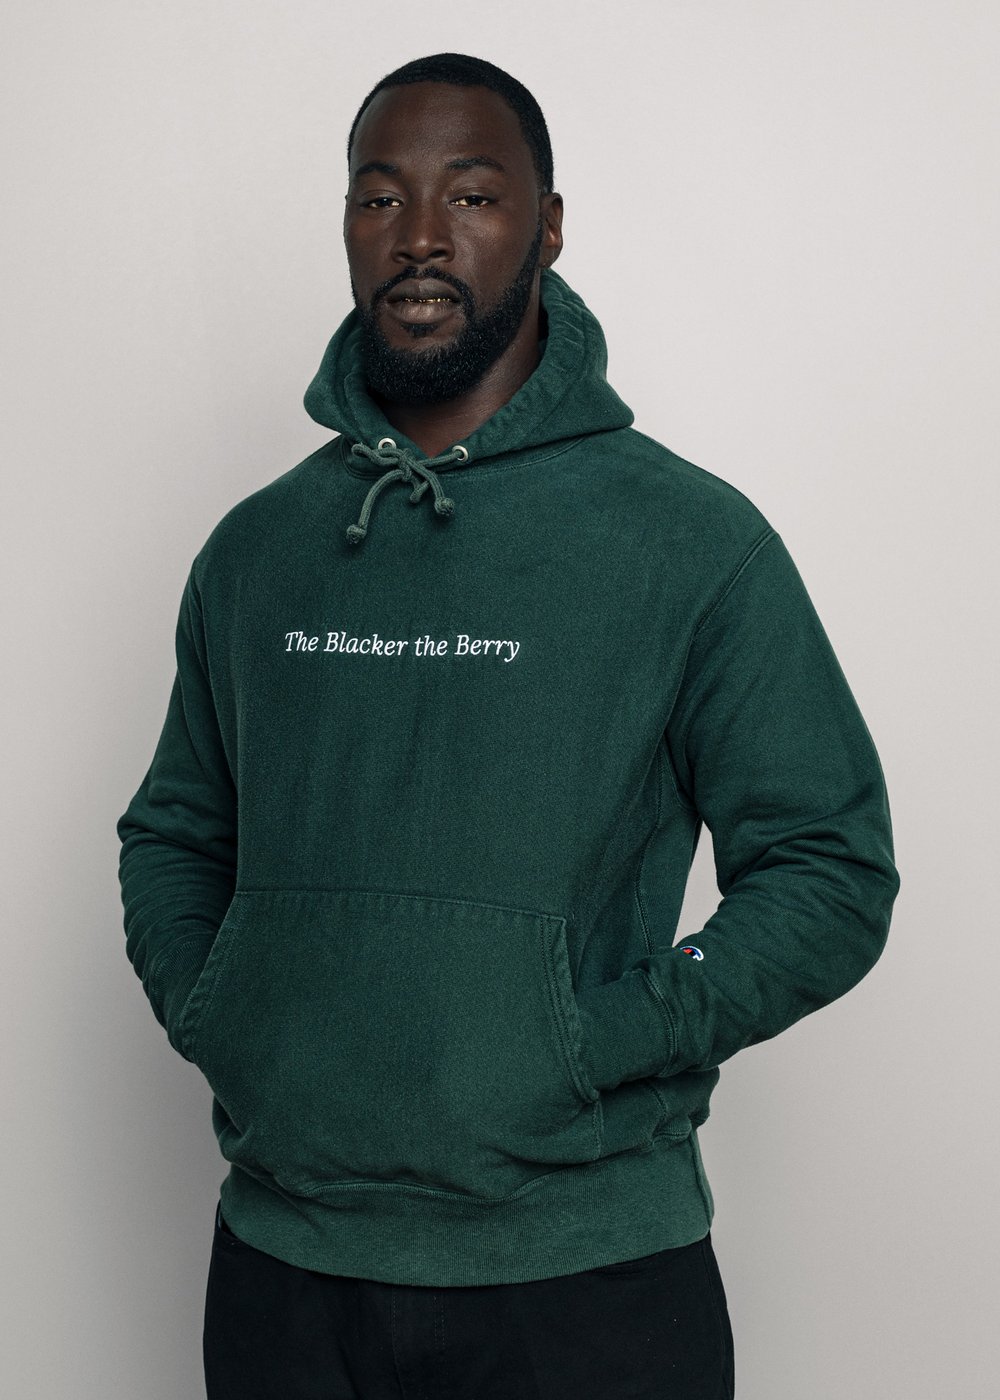 TBTB hoodie (Green/White)